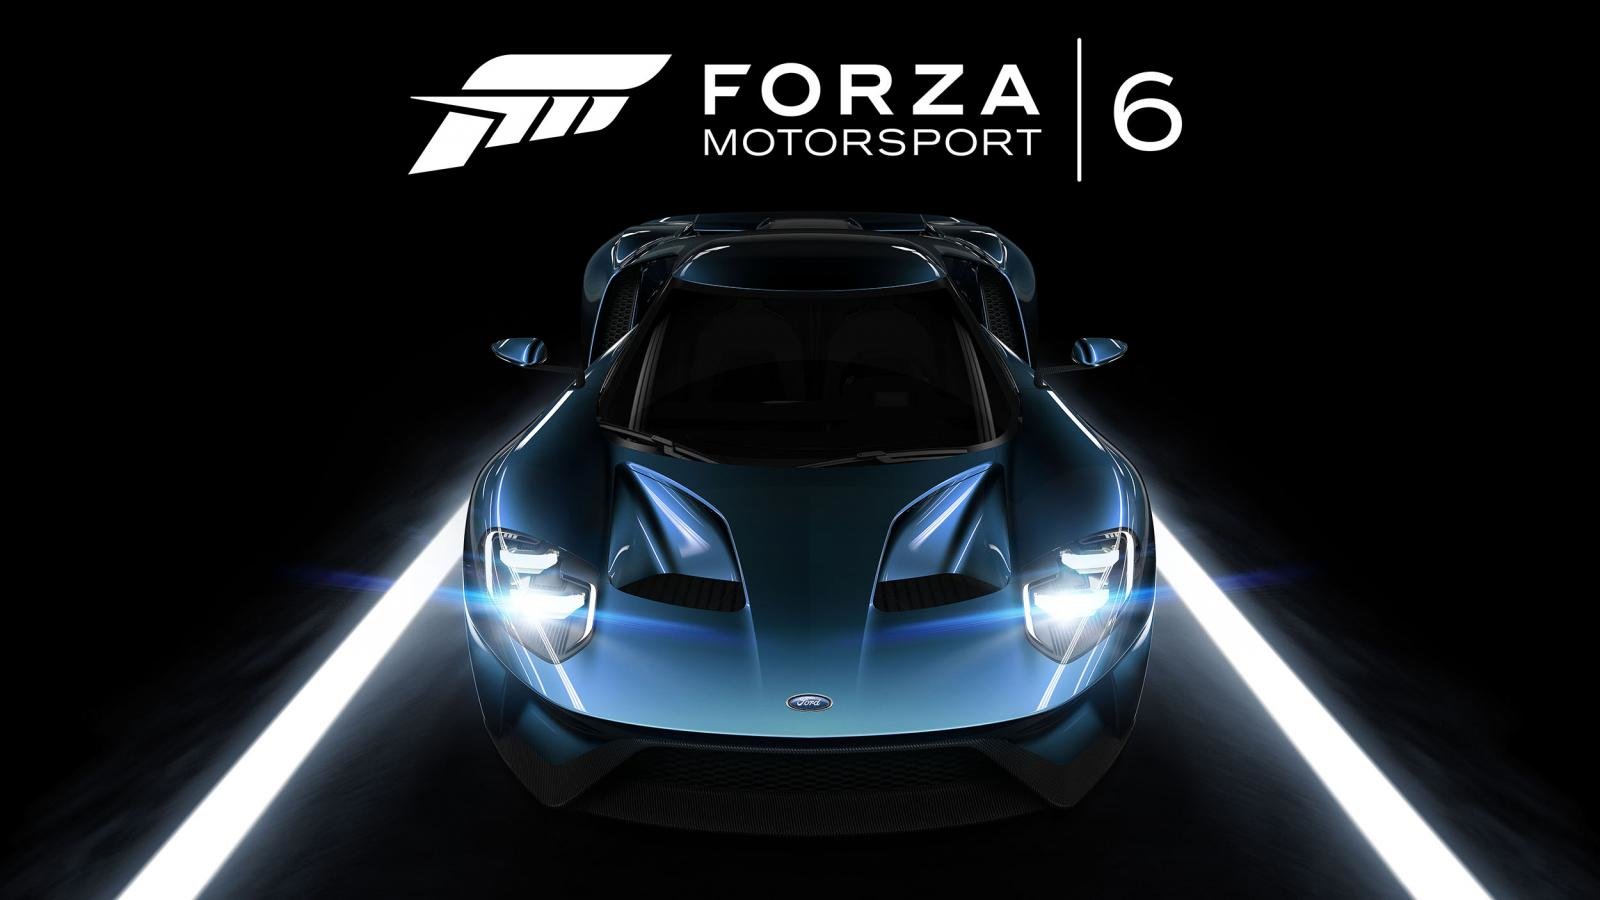 Best Forza Motorsport 6 wallpaper ID:131921 for High Resolution hd 1600x900 computer